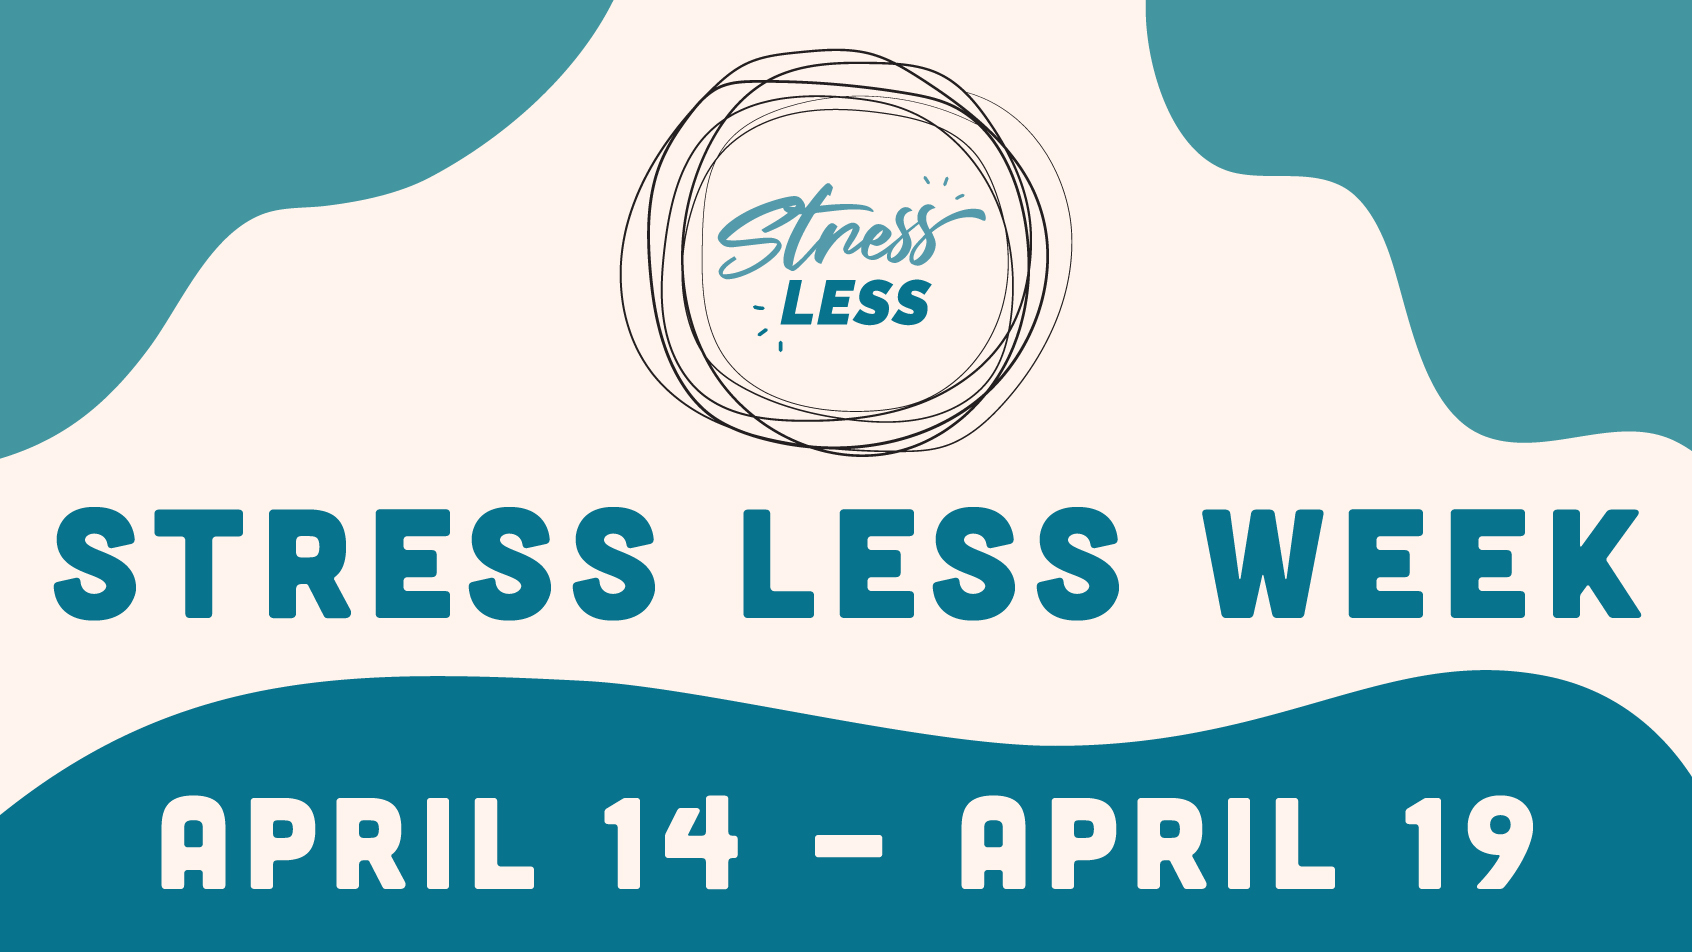 Stress Less Week: April 14 - April 19